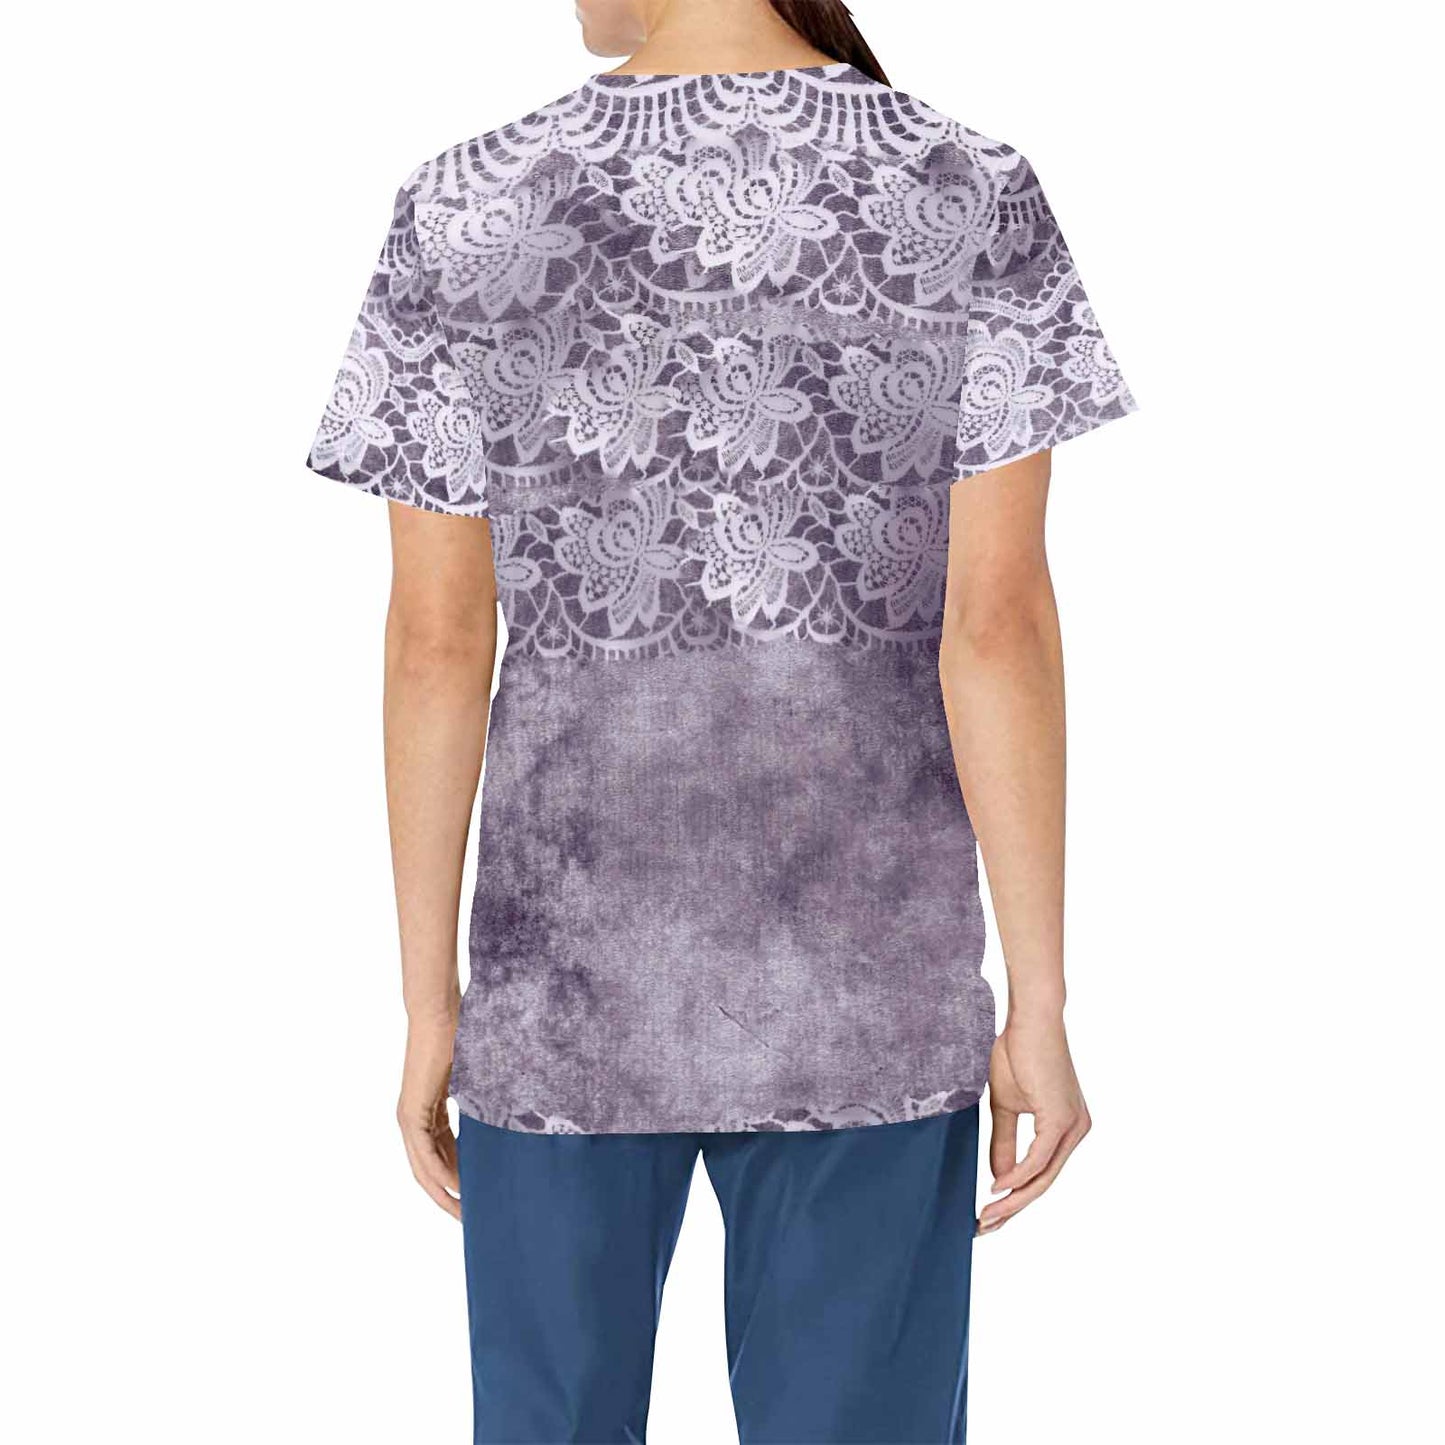 Victorian lace print professional scrubs, nurses scrub, unisex, design 39